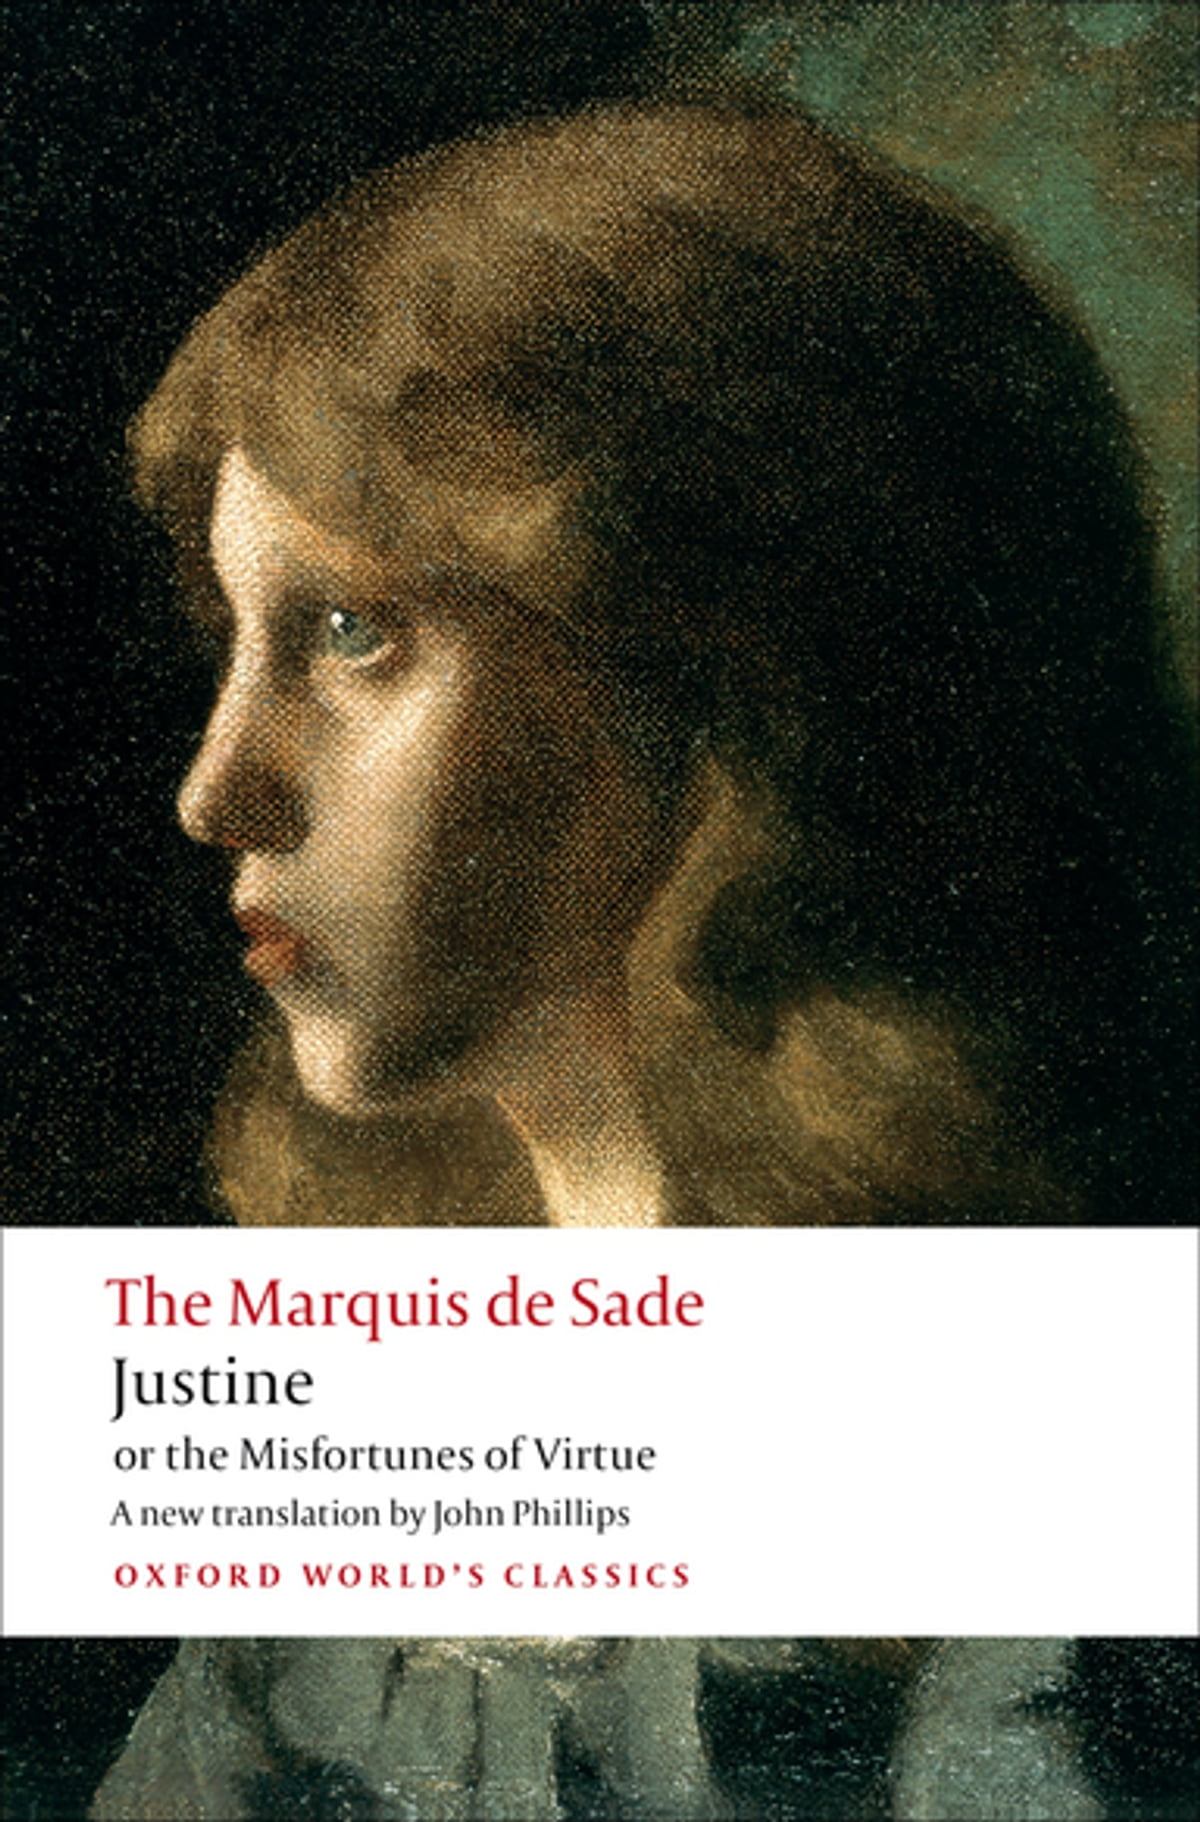 Who Was the Marquis de Sade?, History